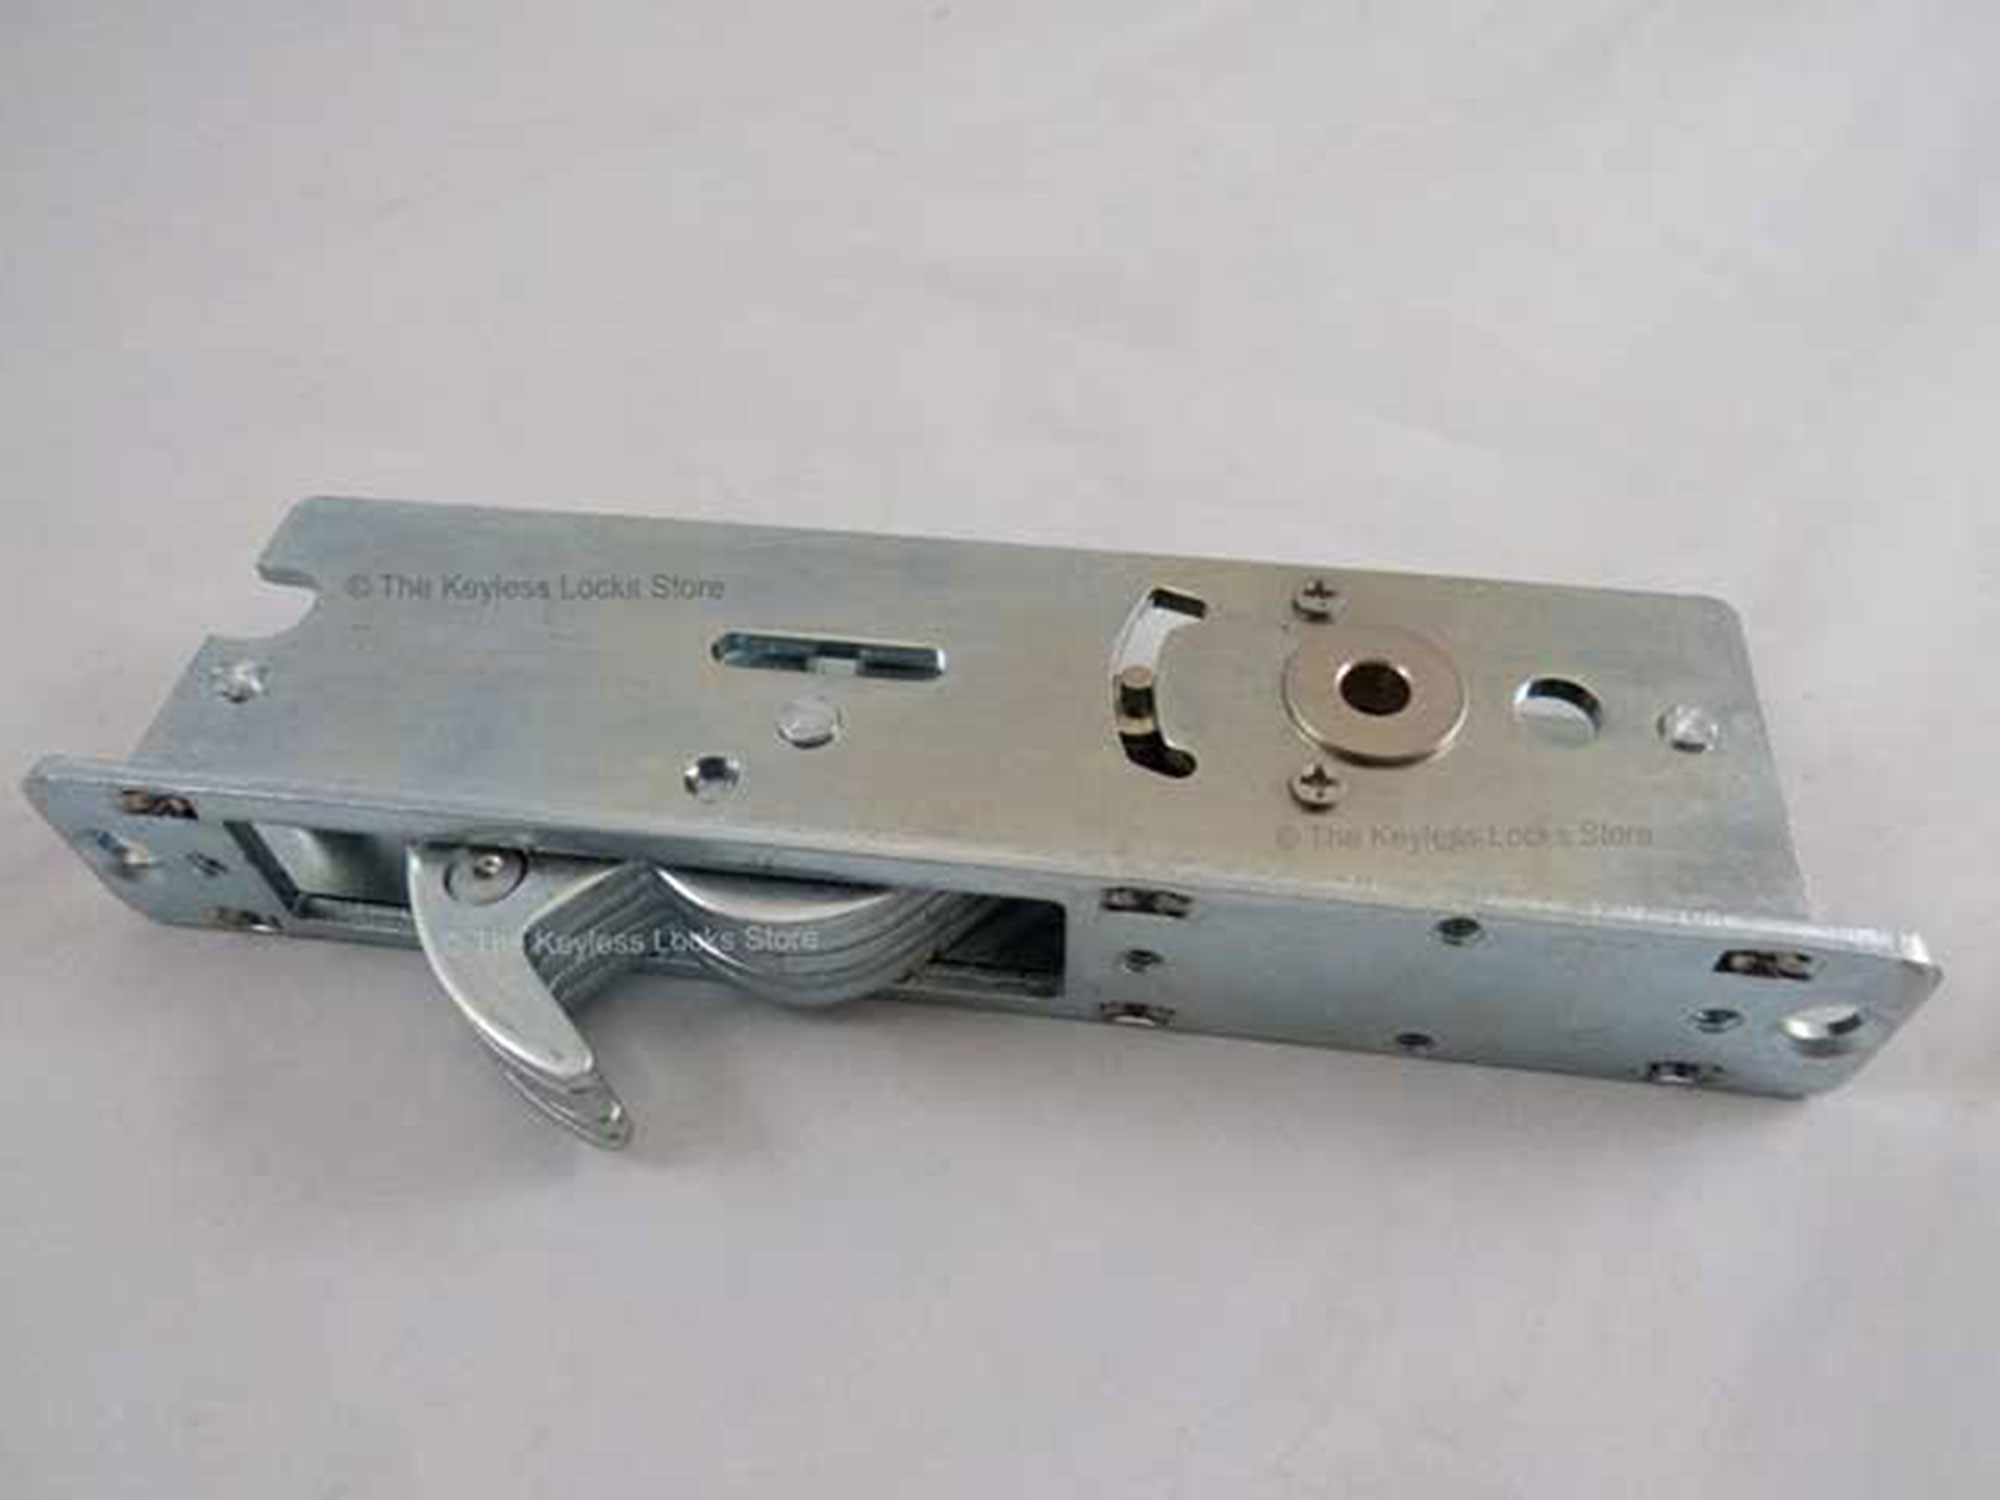 Lockey 2950DC Narrow-Stile Hookbolt Double-Keypad Lock